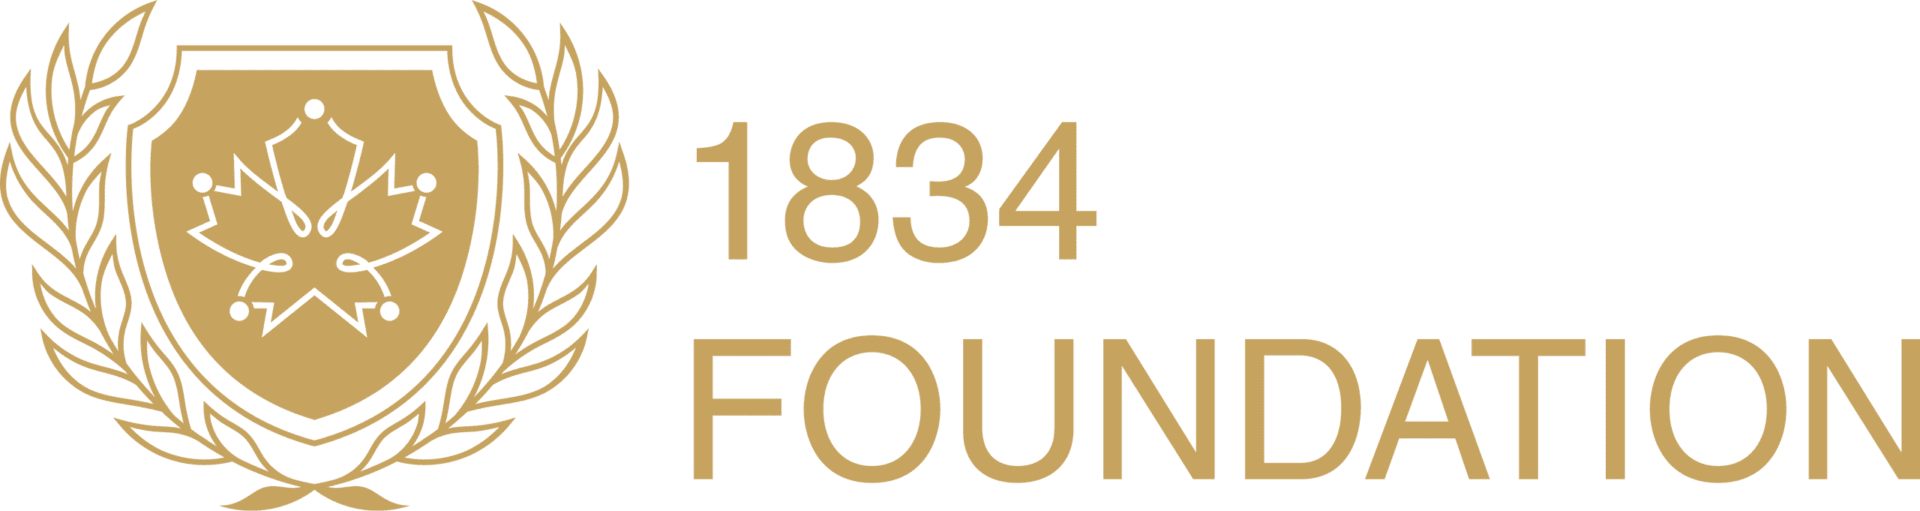 logo-1834